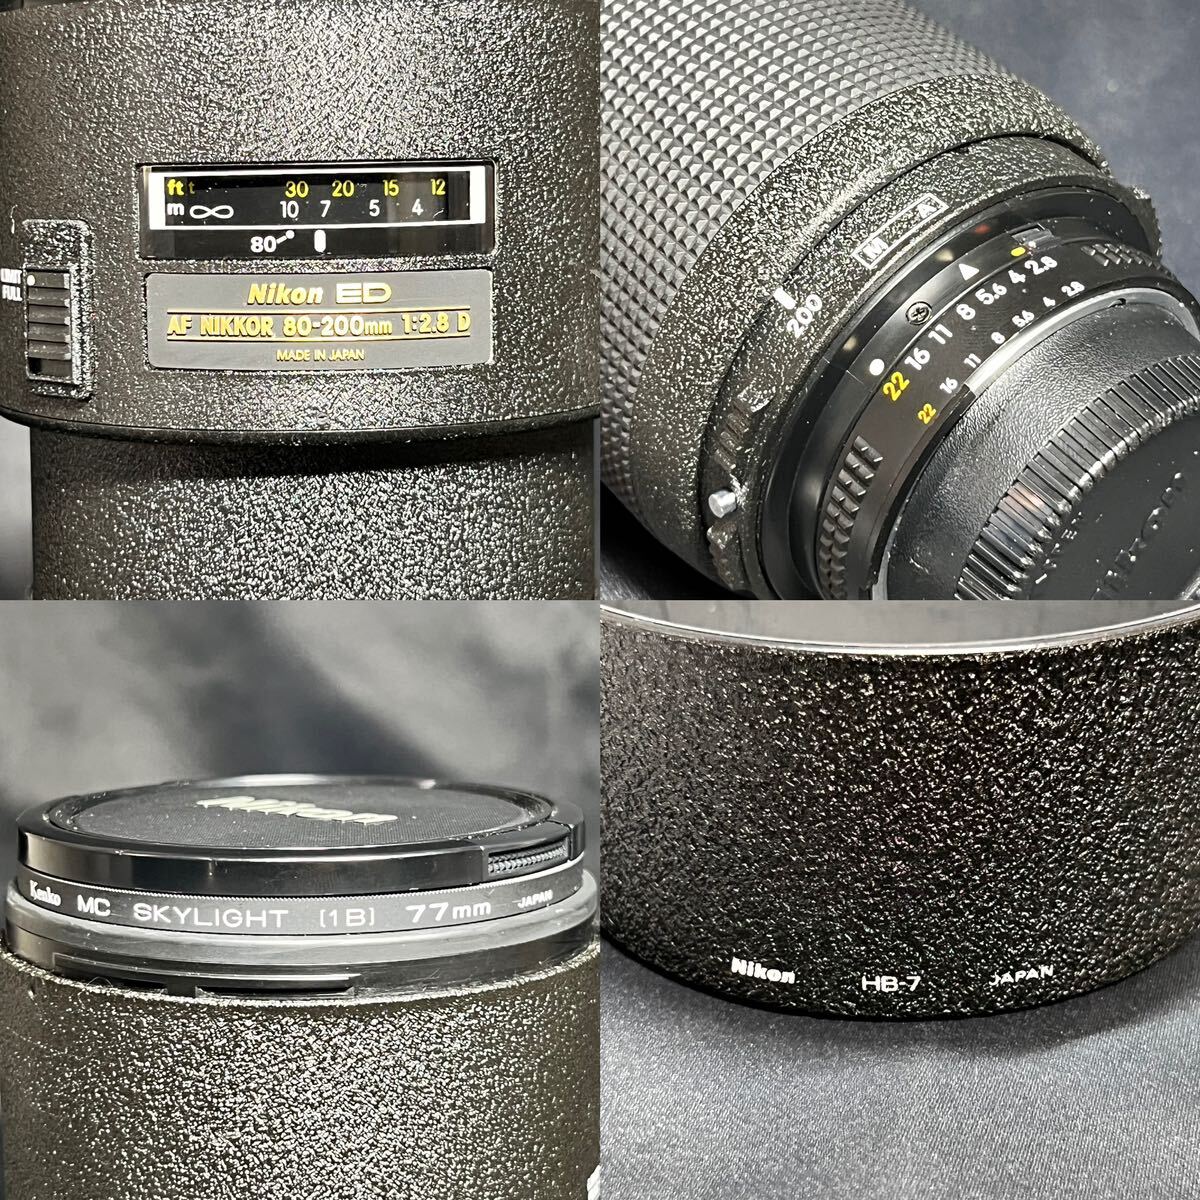 Nikon ニコン ED AF NIKKOR 80-200mm 1:2.8 D カメラレンズ/Nikon HB-7 レンズフード レンズキャップ付き 美品の画像9